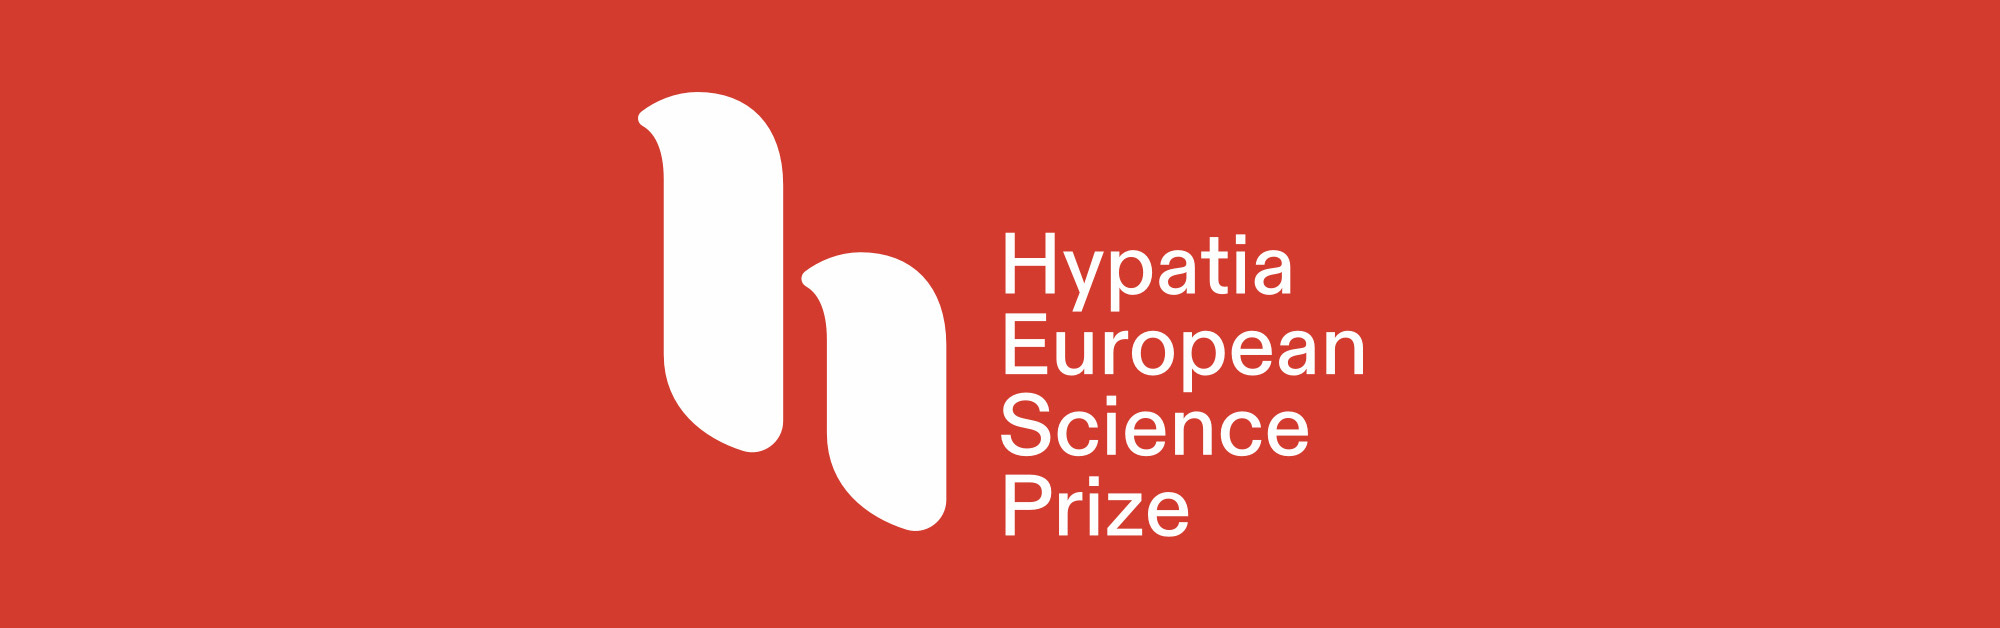 Hypatia European Science Prize